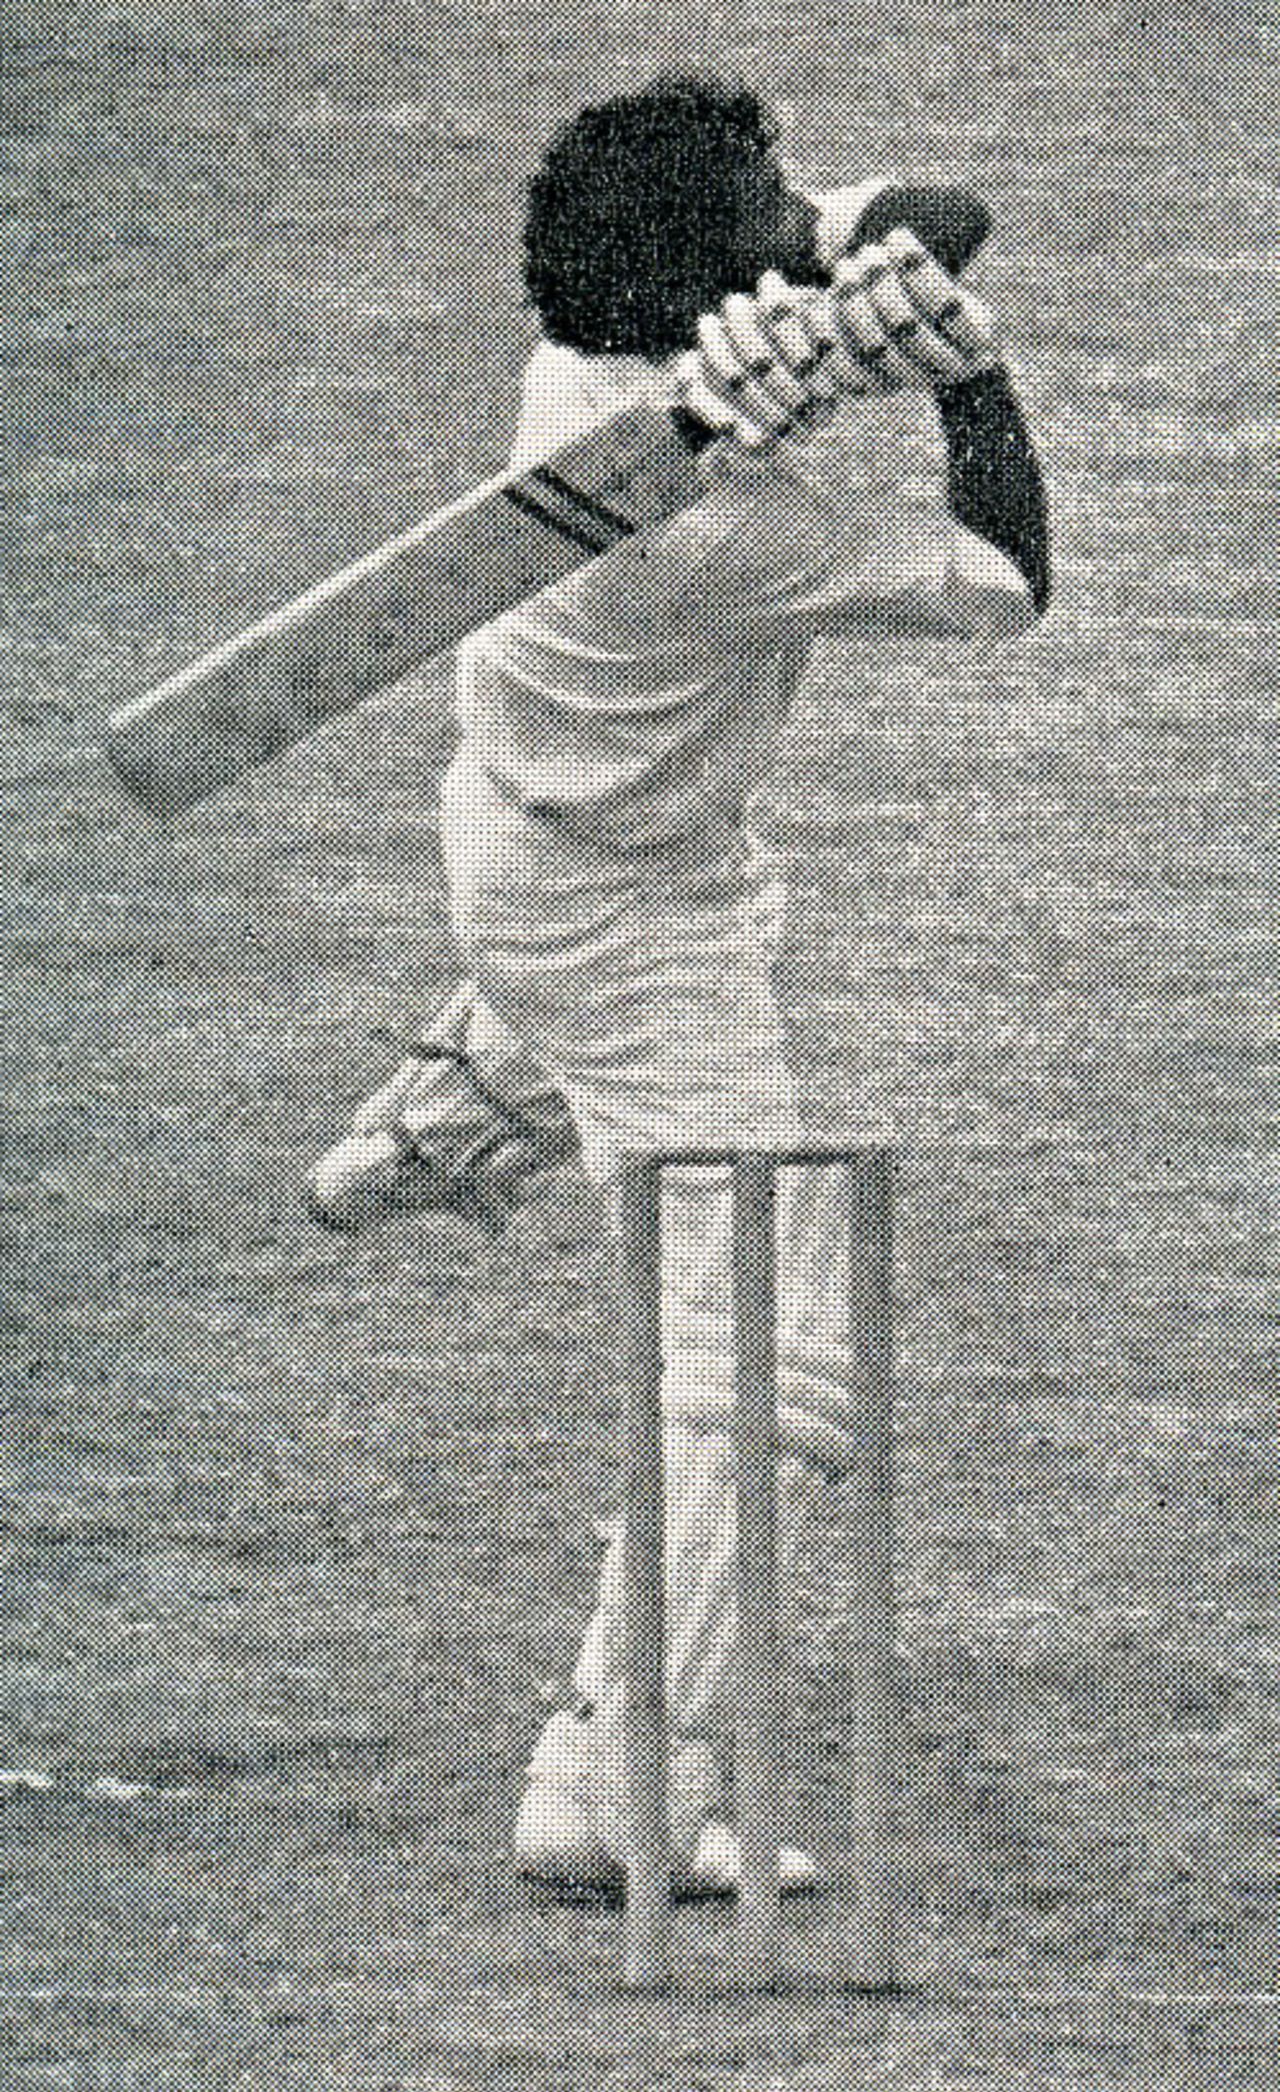 Alvin Kallicharran hoicks Dennis Lillee for six, West Indies v Australia, The Oval, June 14, 1975